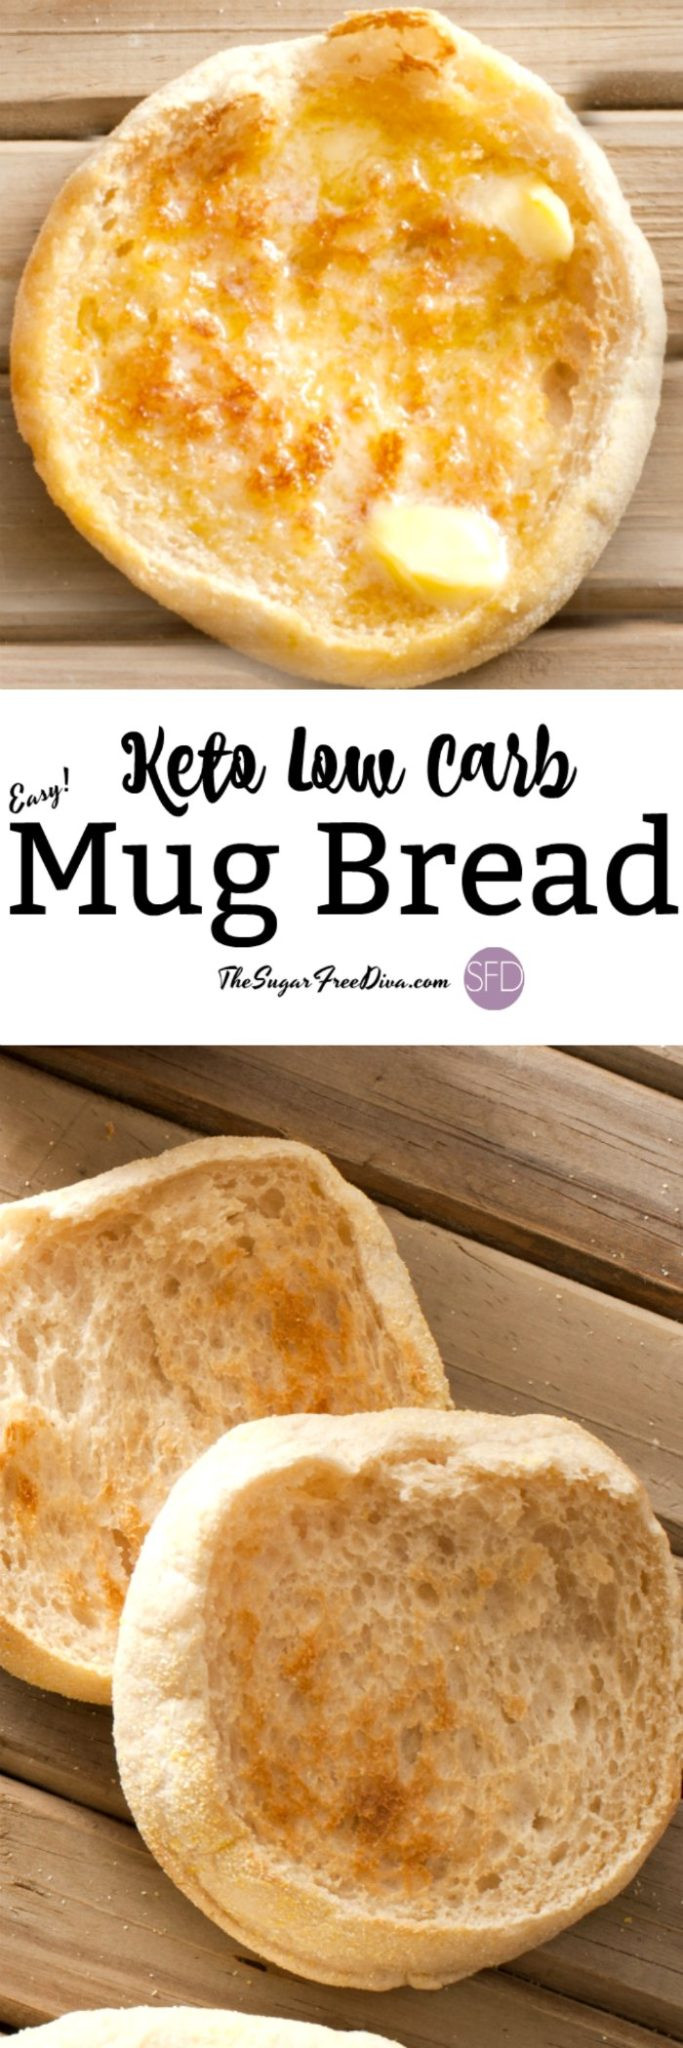 Low Carb Keto Bread Recipes
 Easy and Yummy Keto Low Carb Mug Bread Recipe